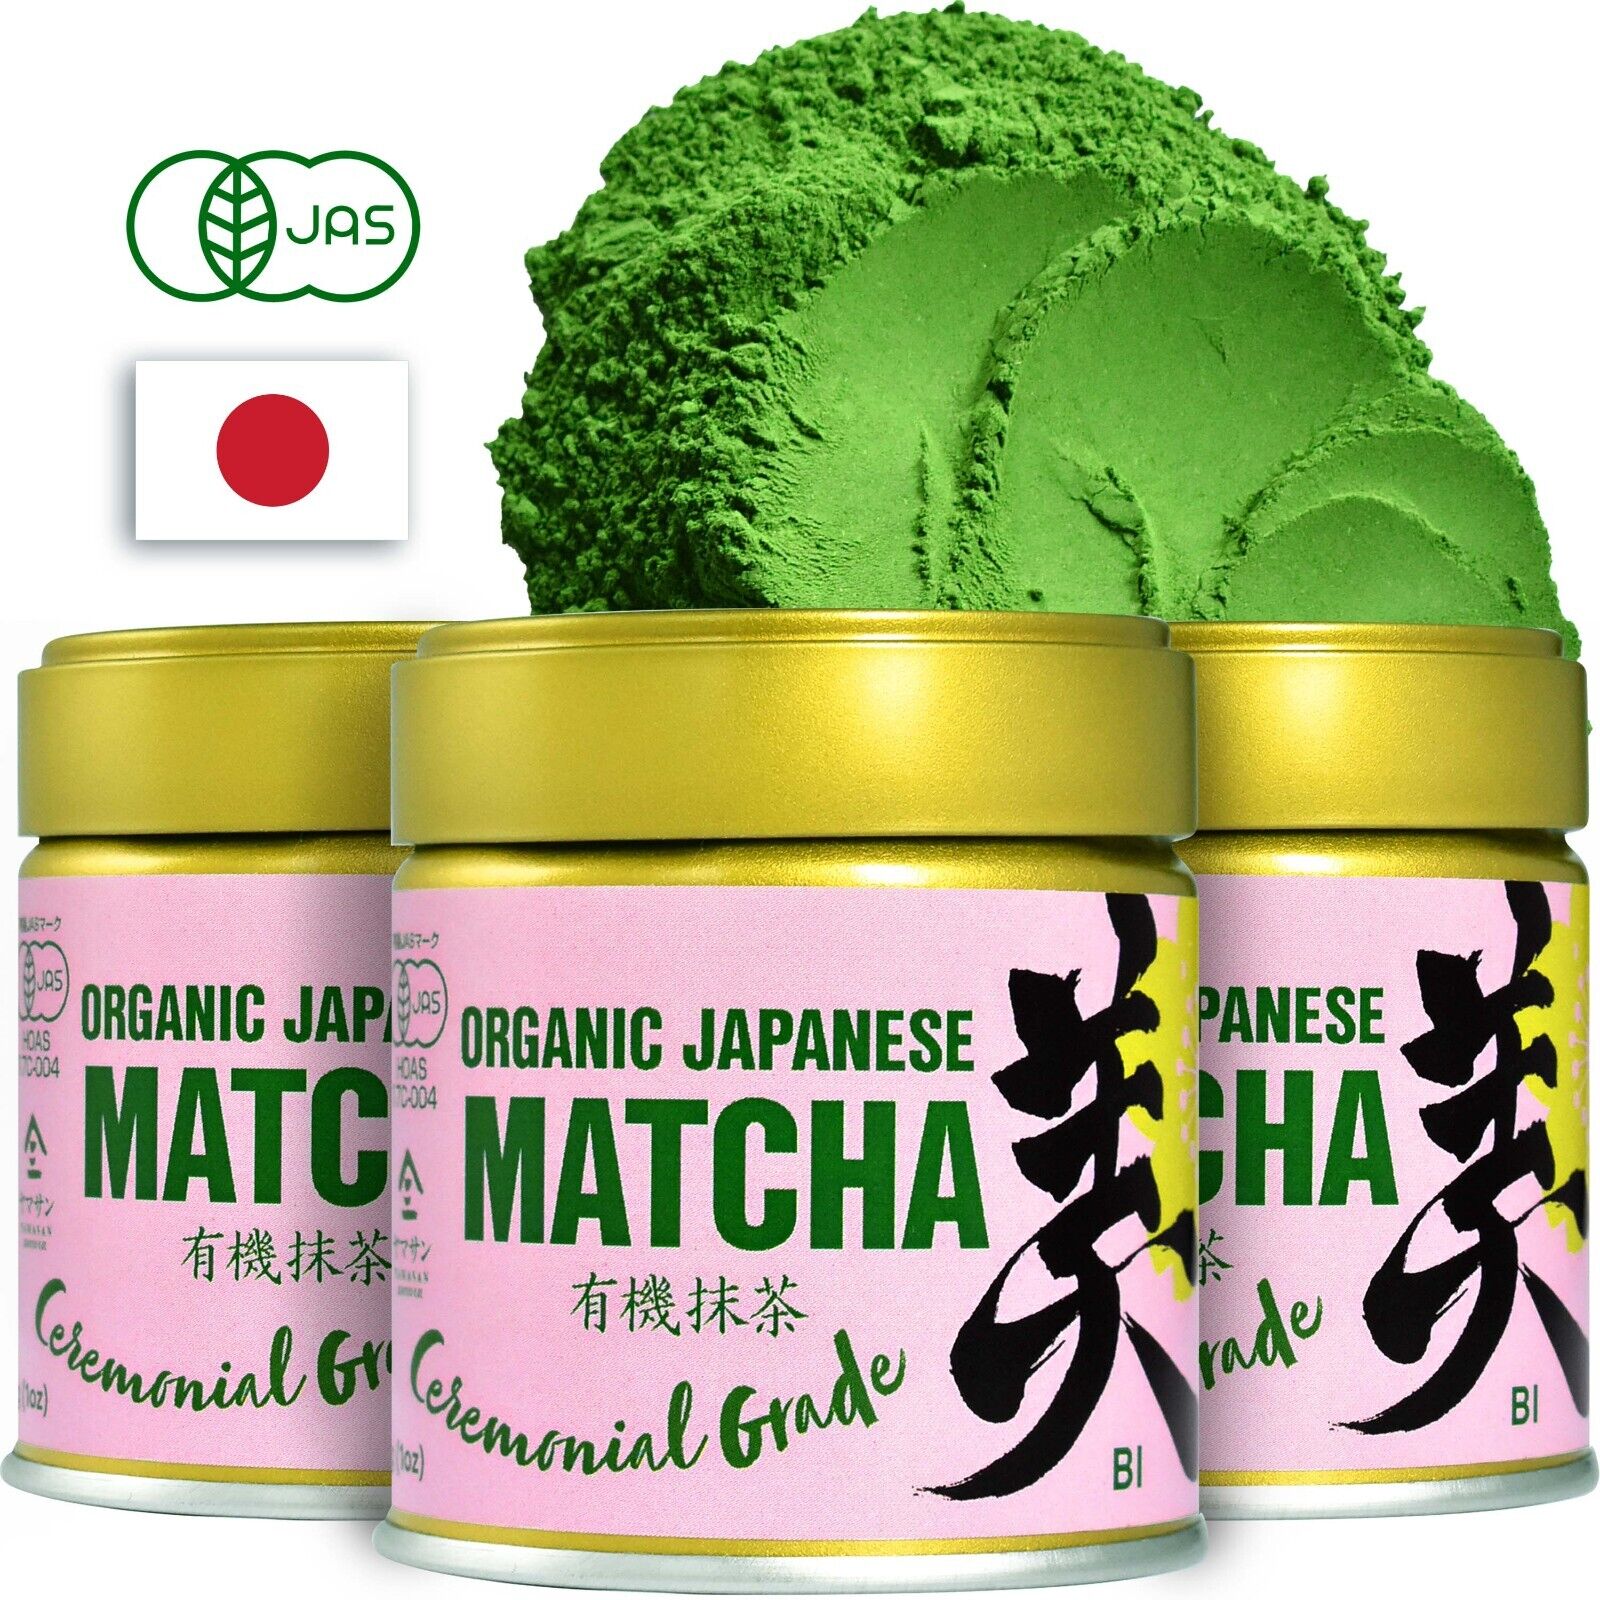 Japanese Organic Matcha【 Ceremonial Grade】 Matcha Green Tea Powder BI30gx3SET